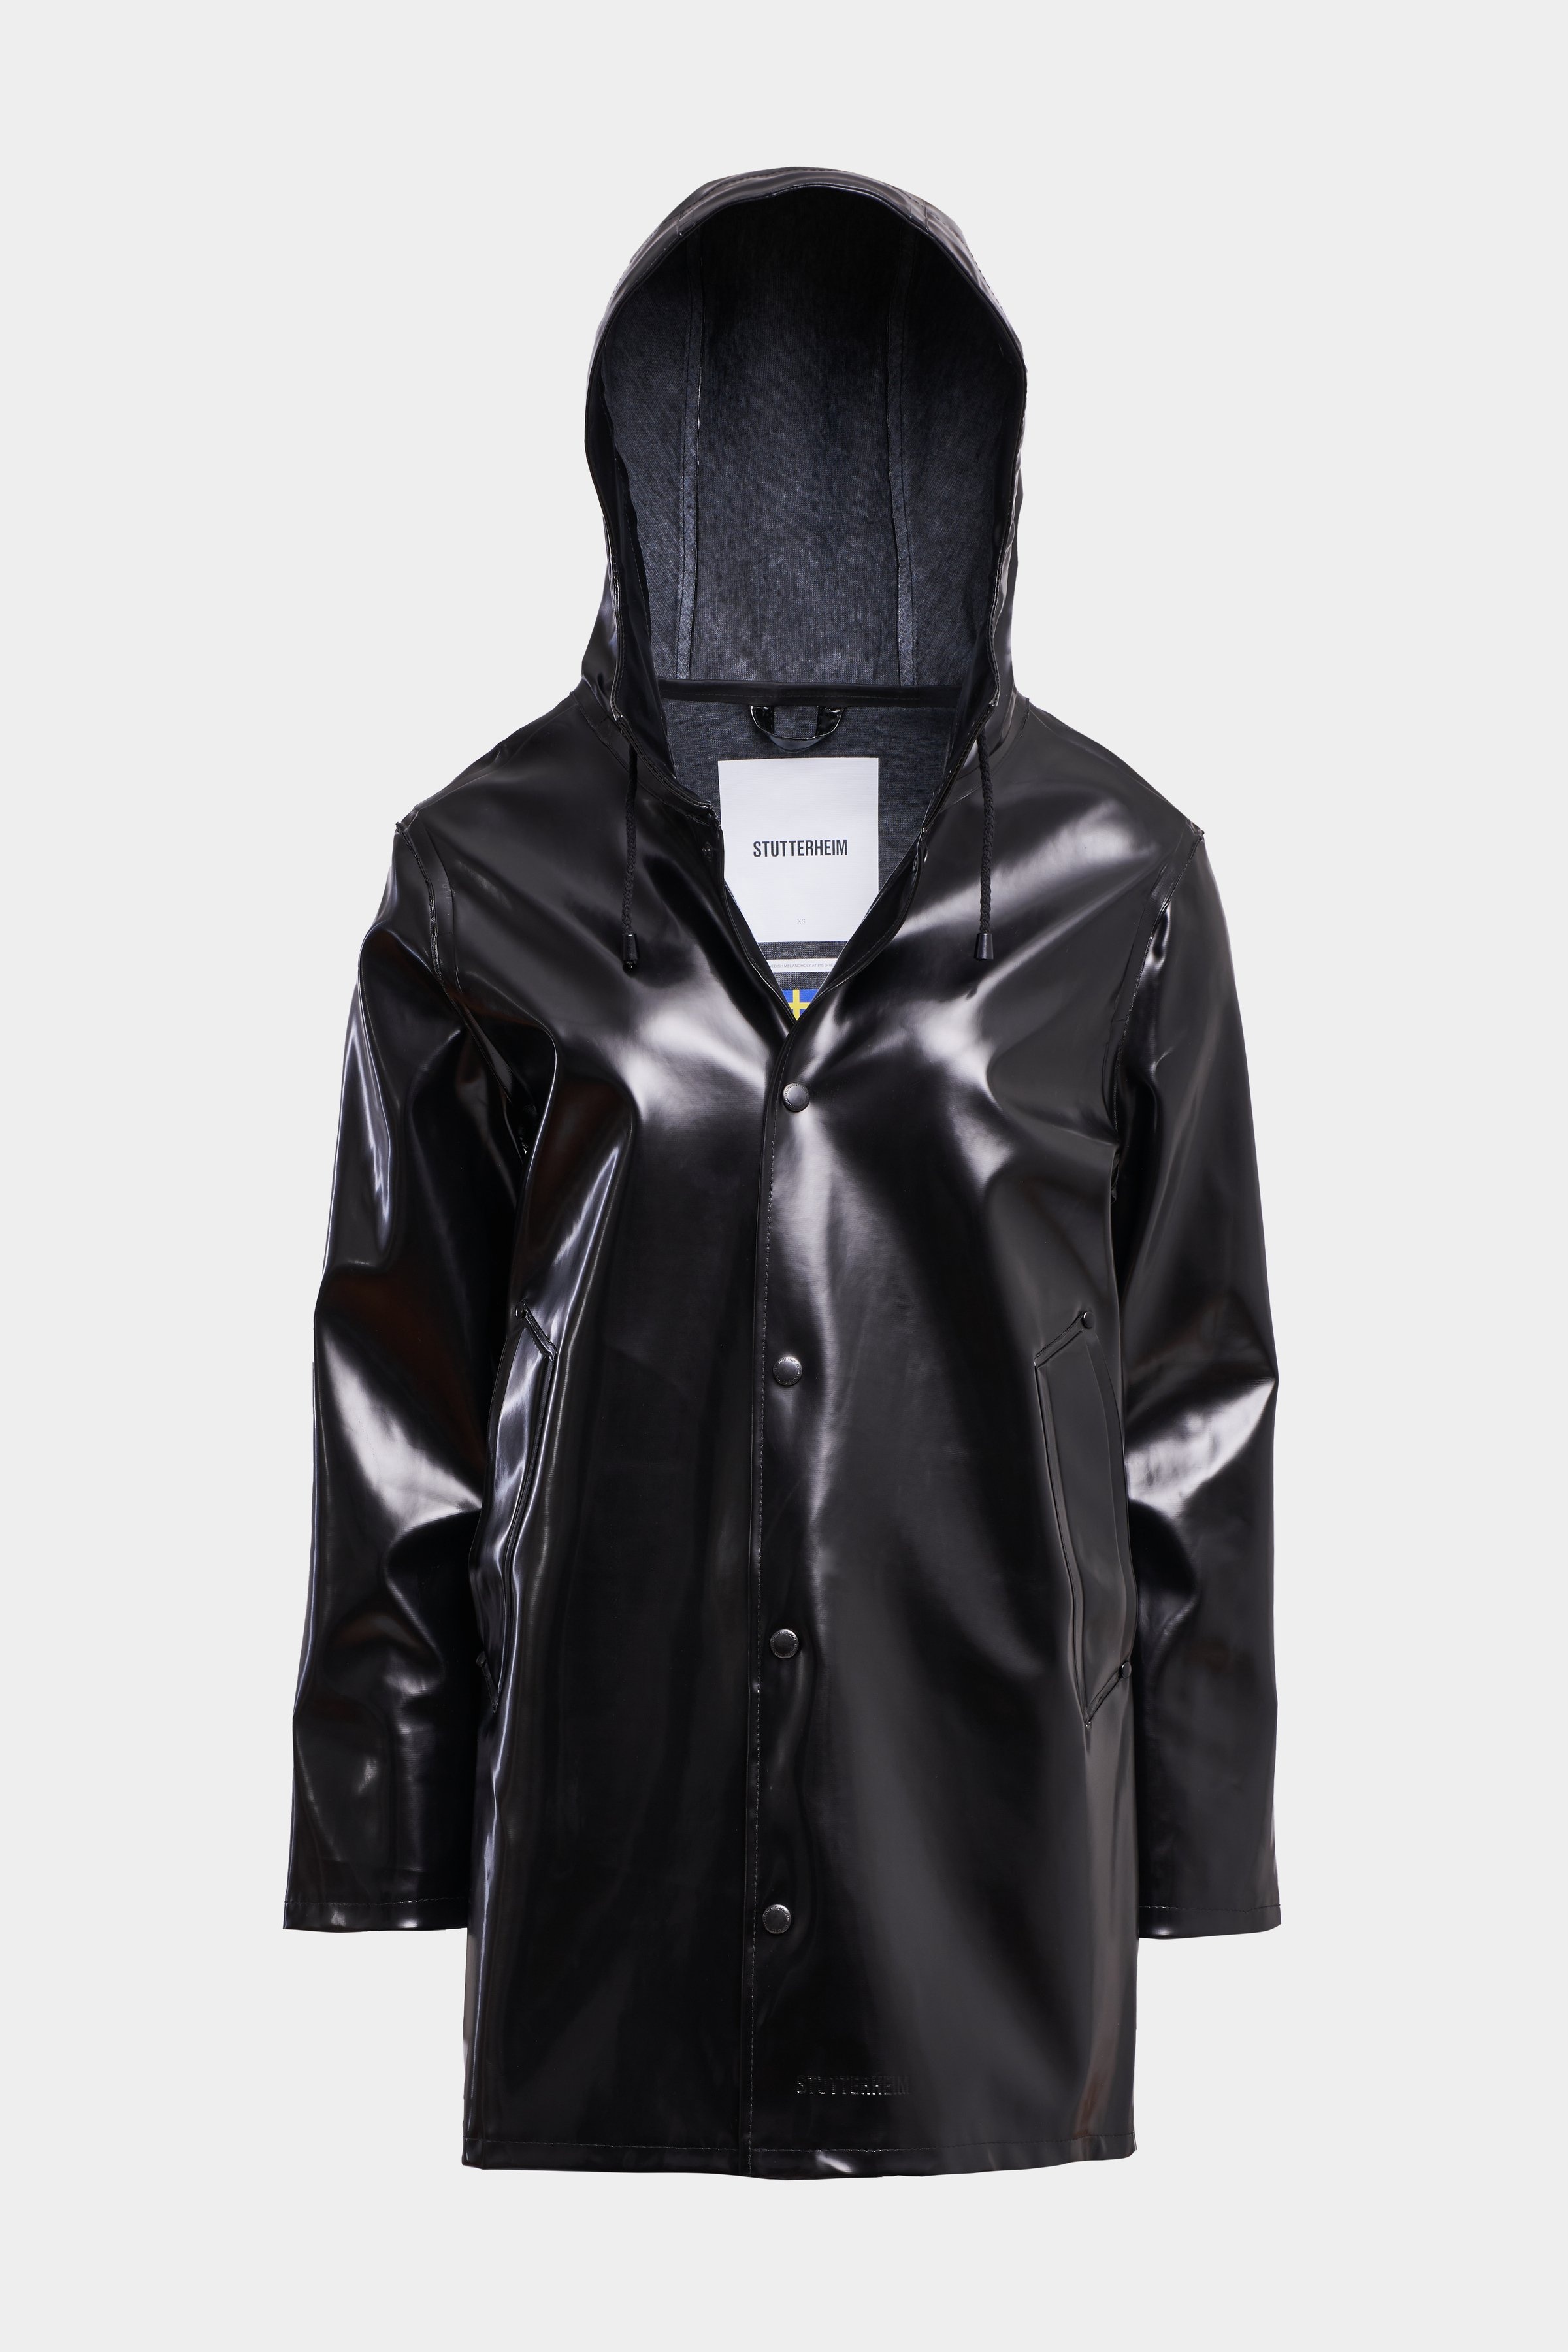 Stockholm Opal Raincoat Black - 1